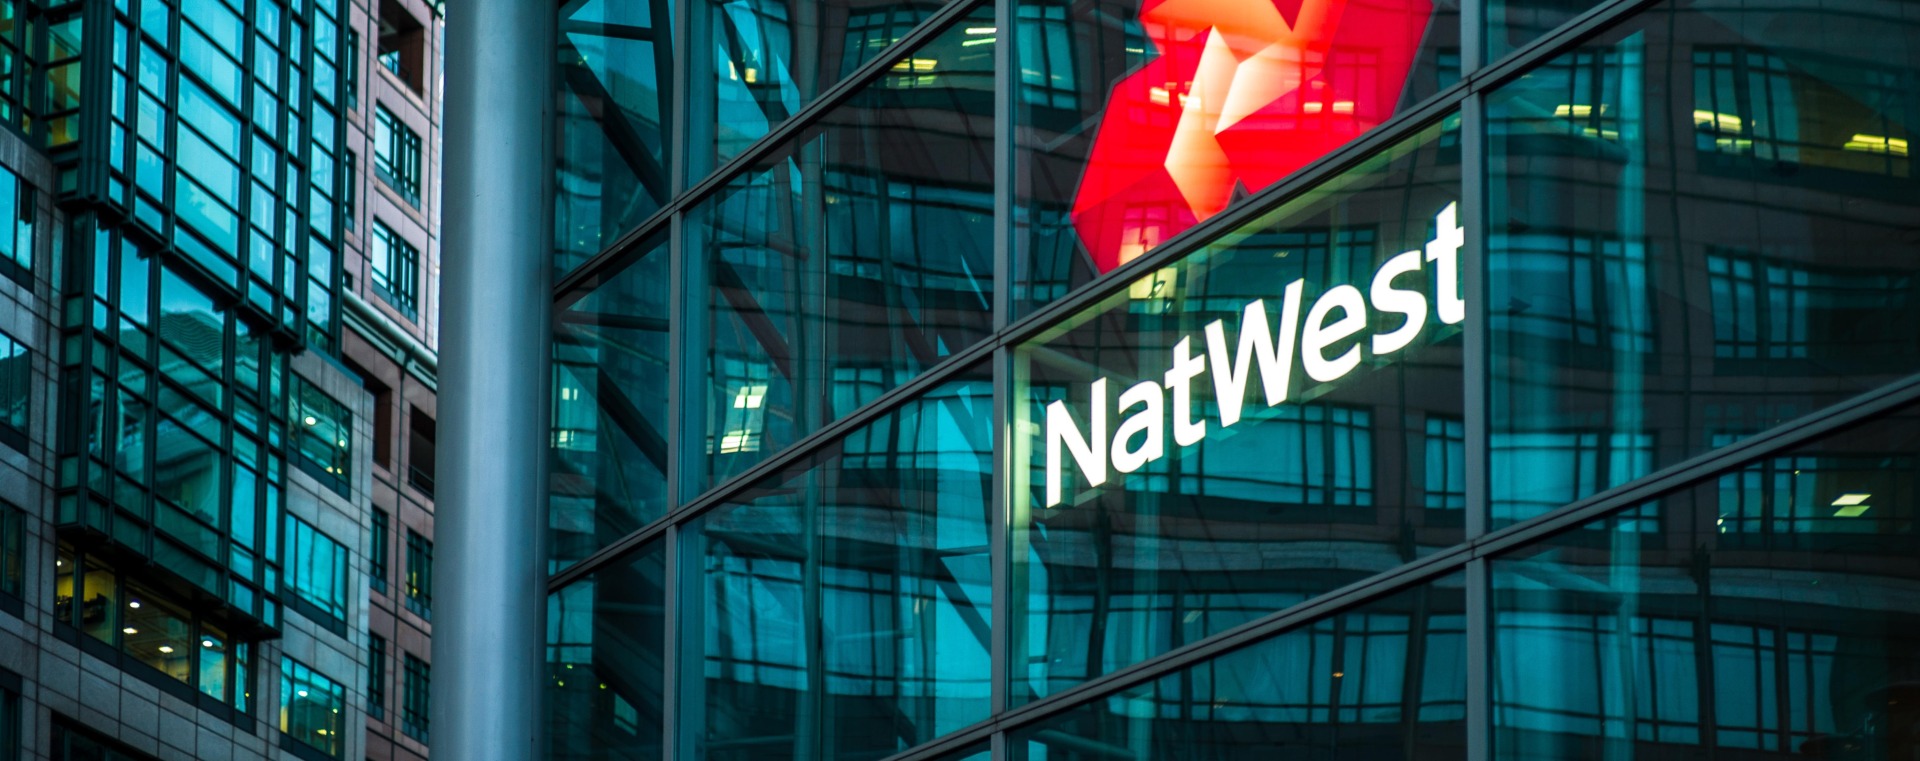 NatWest Records Highest Annual Profit Since 2007 Financial Crisis 